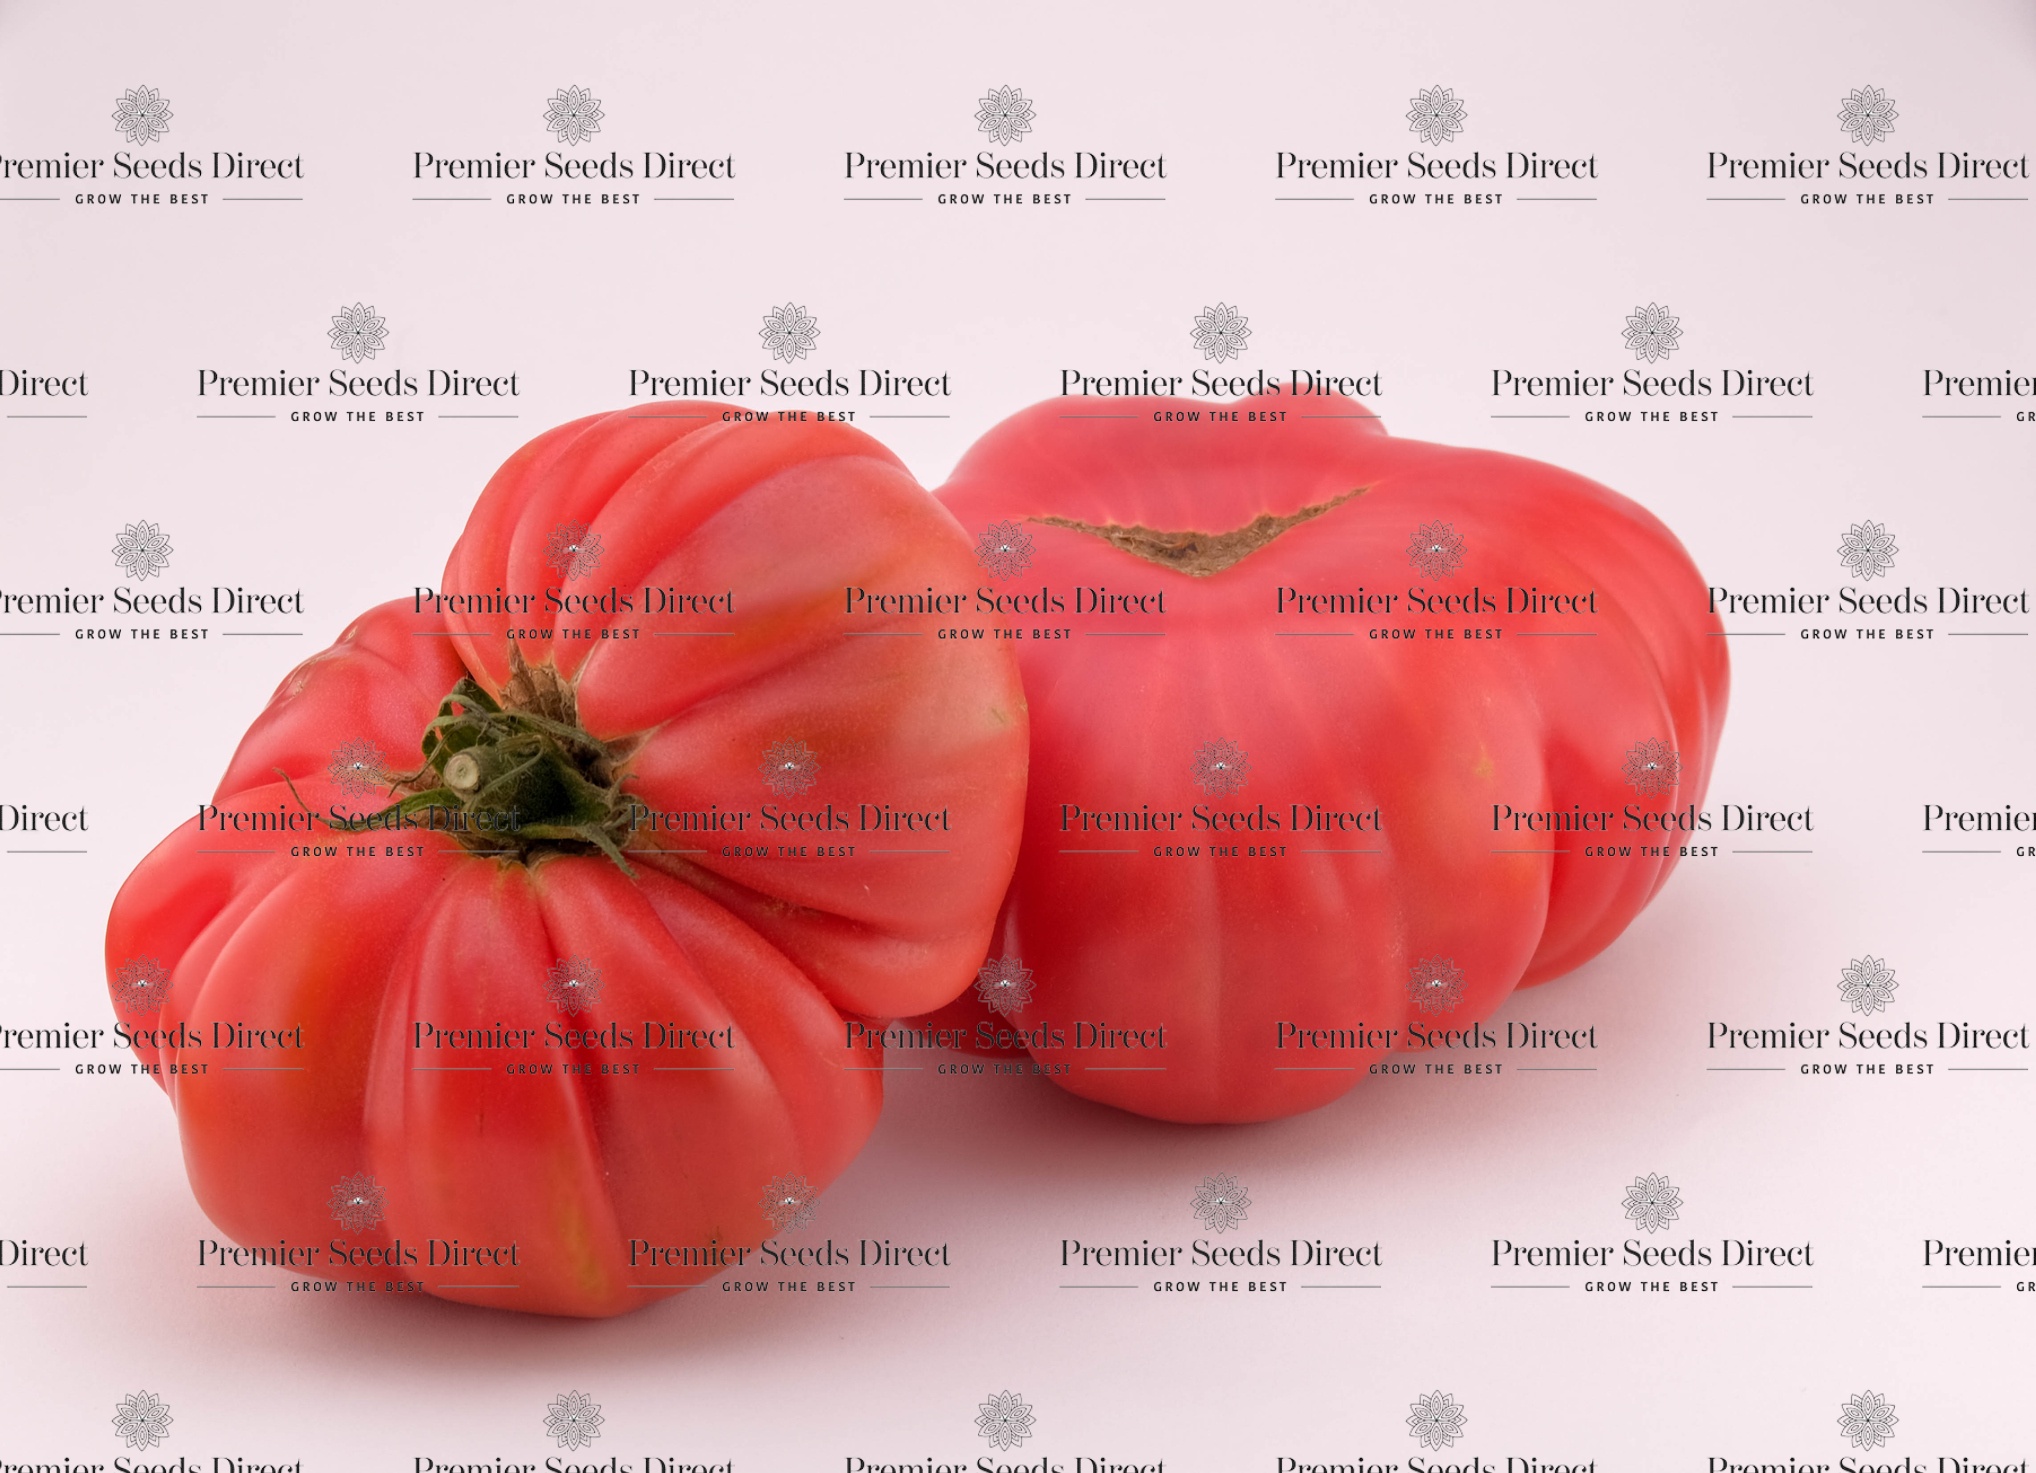 Brandywine Pink DF Tomato – Glen Seeds